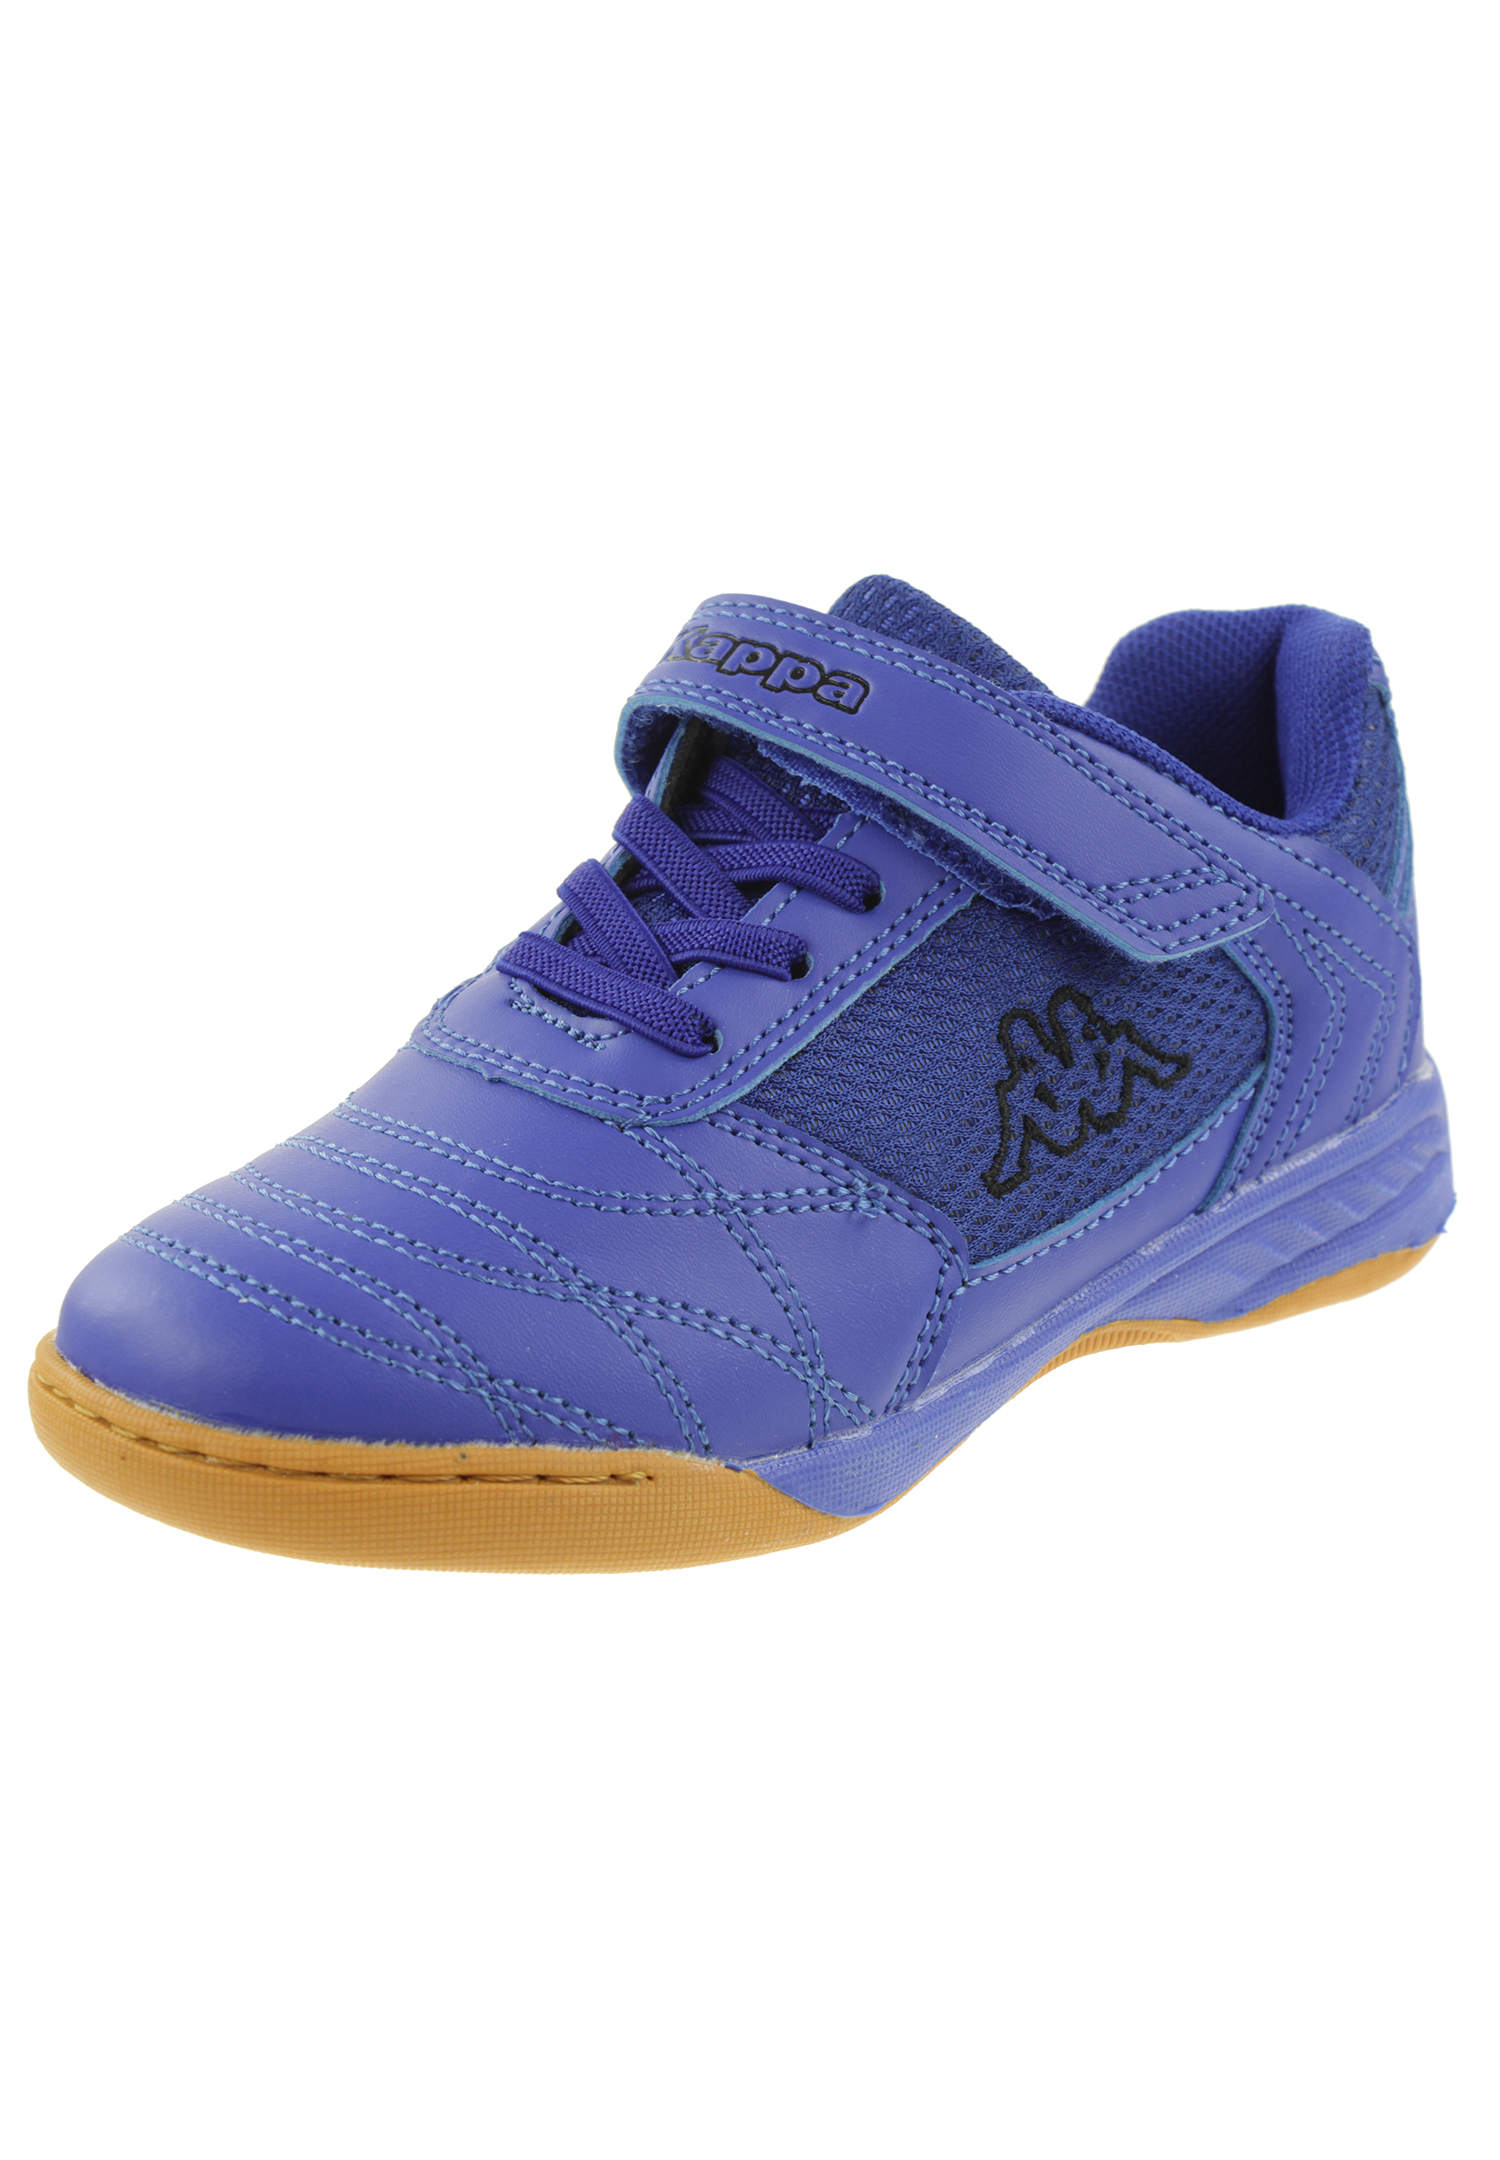 Kappa Unisex Kinder Sneaker Turnschuh 260765OCK 6011 blue/black von Kappa